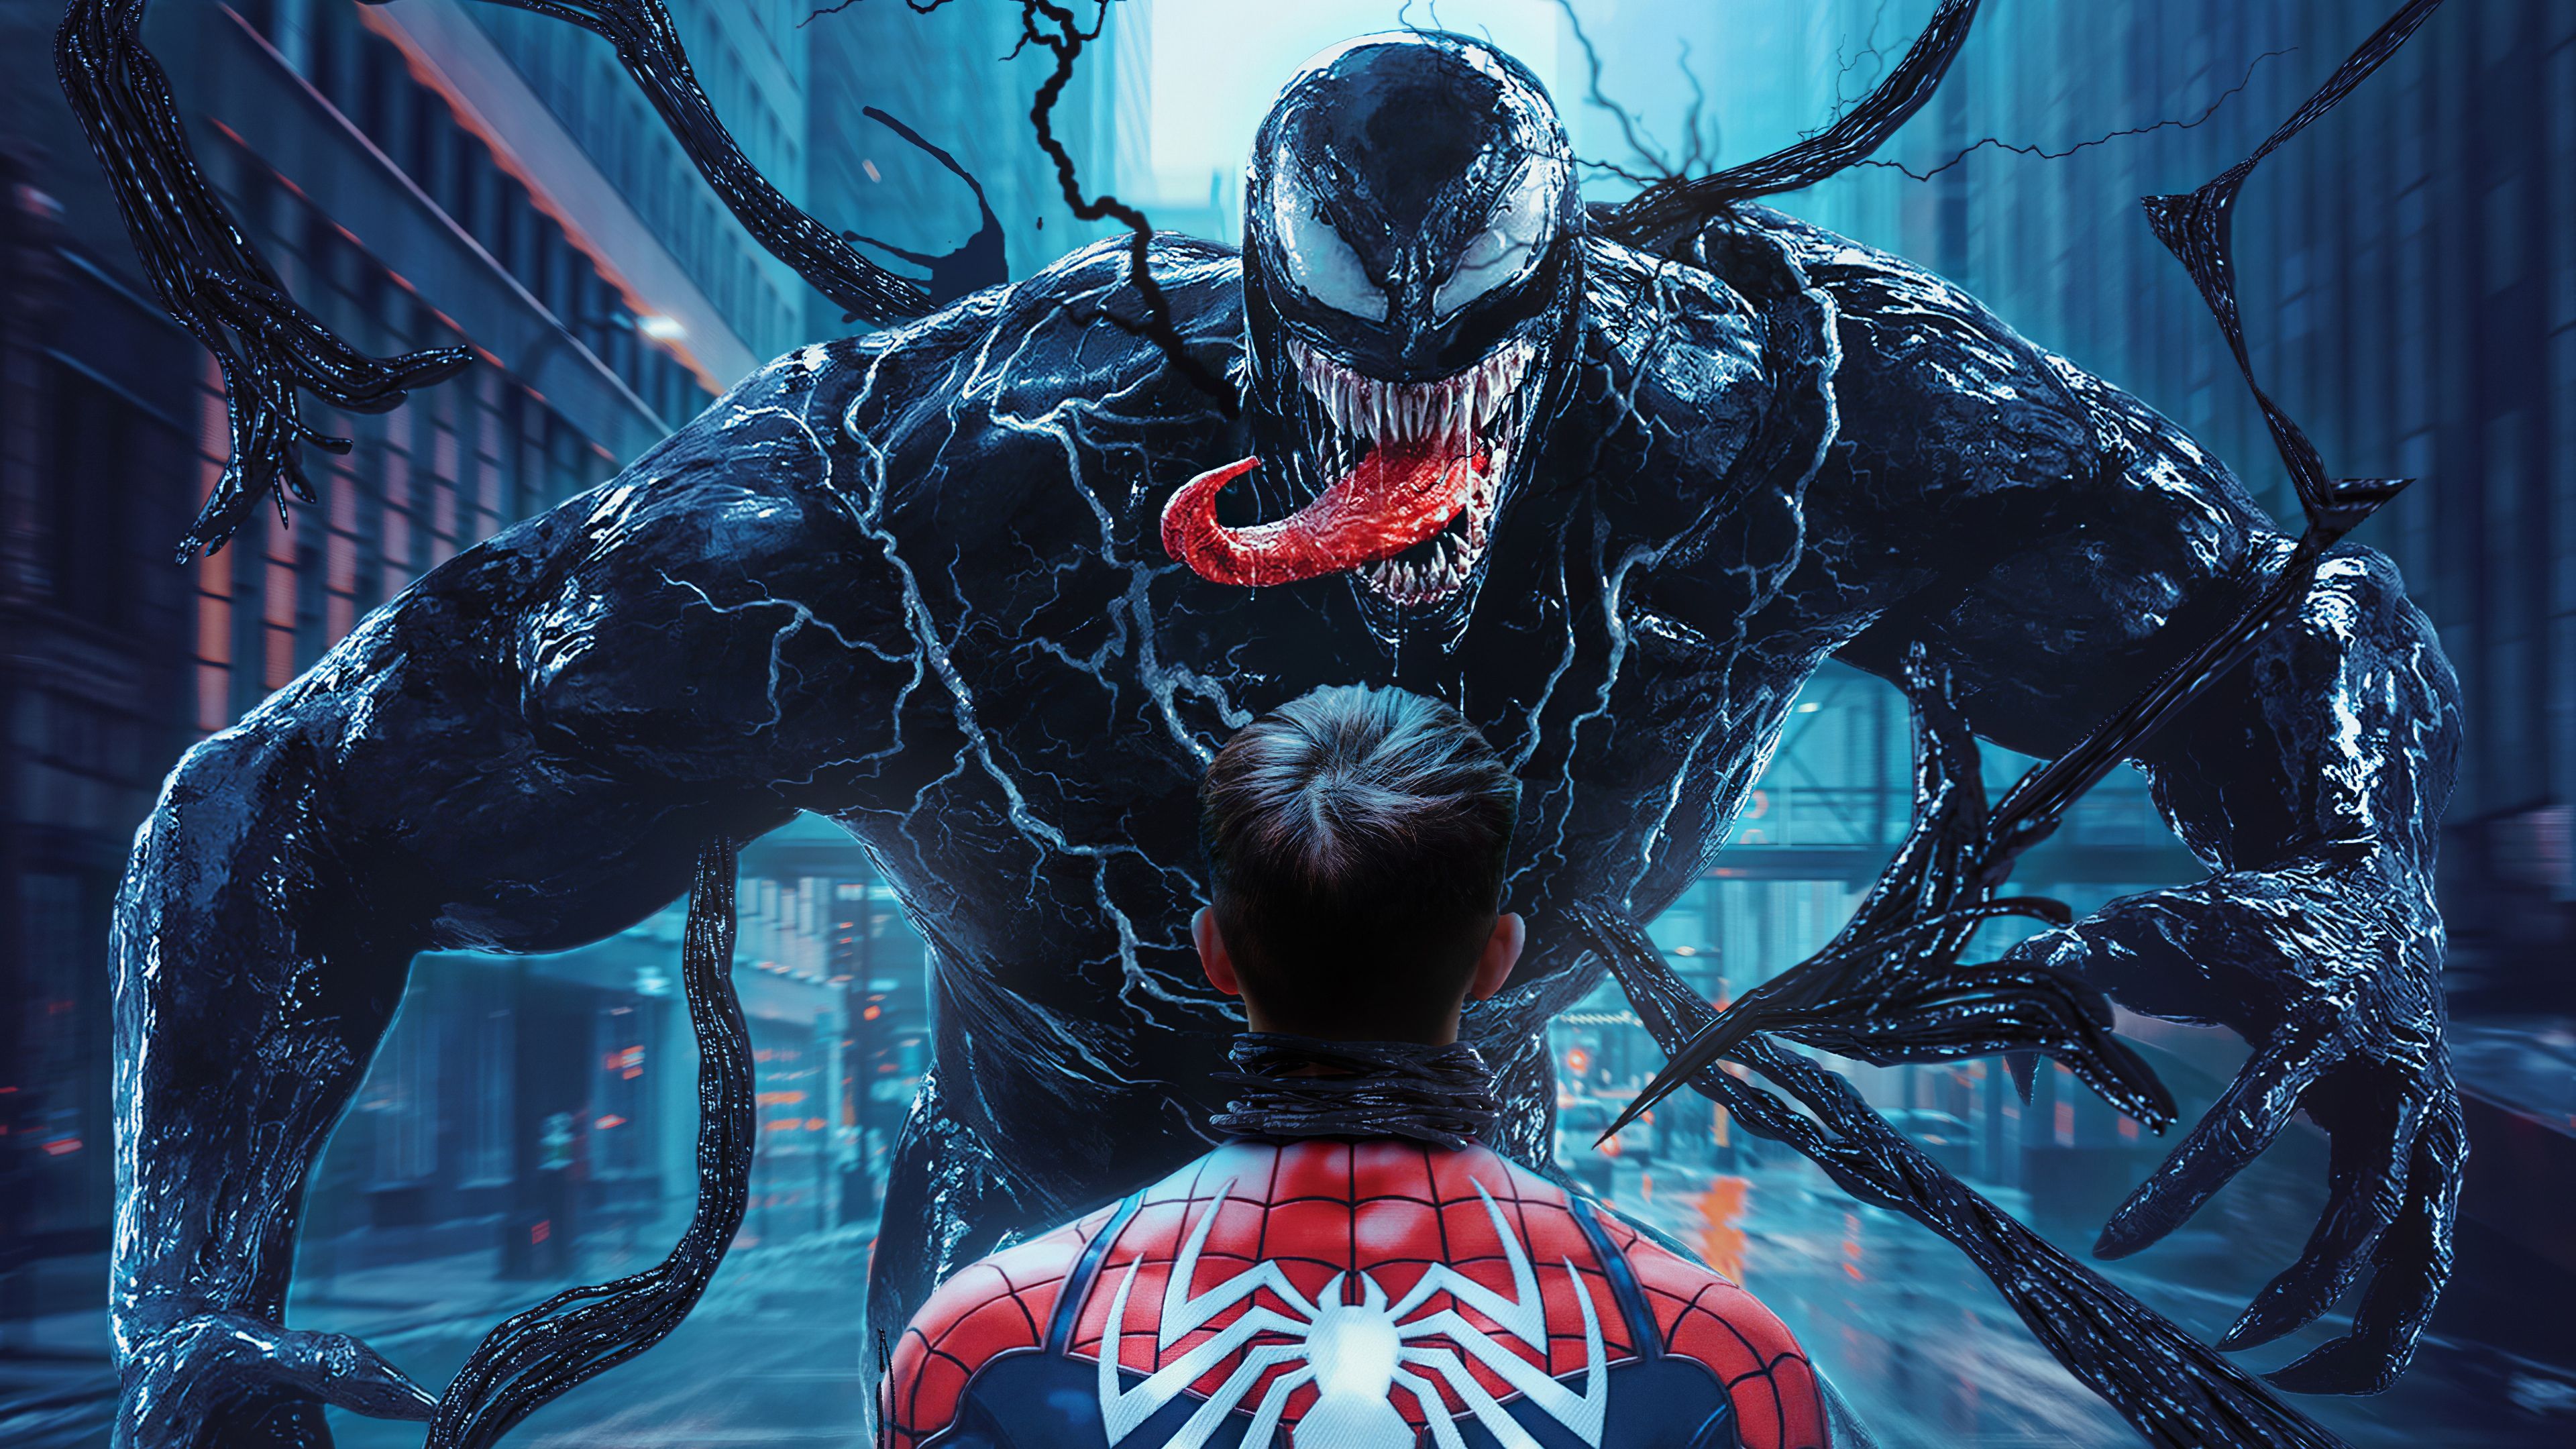 SpiderMan vs Venom Wallpapers.